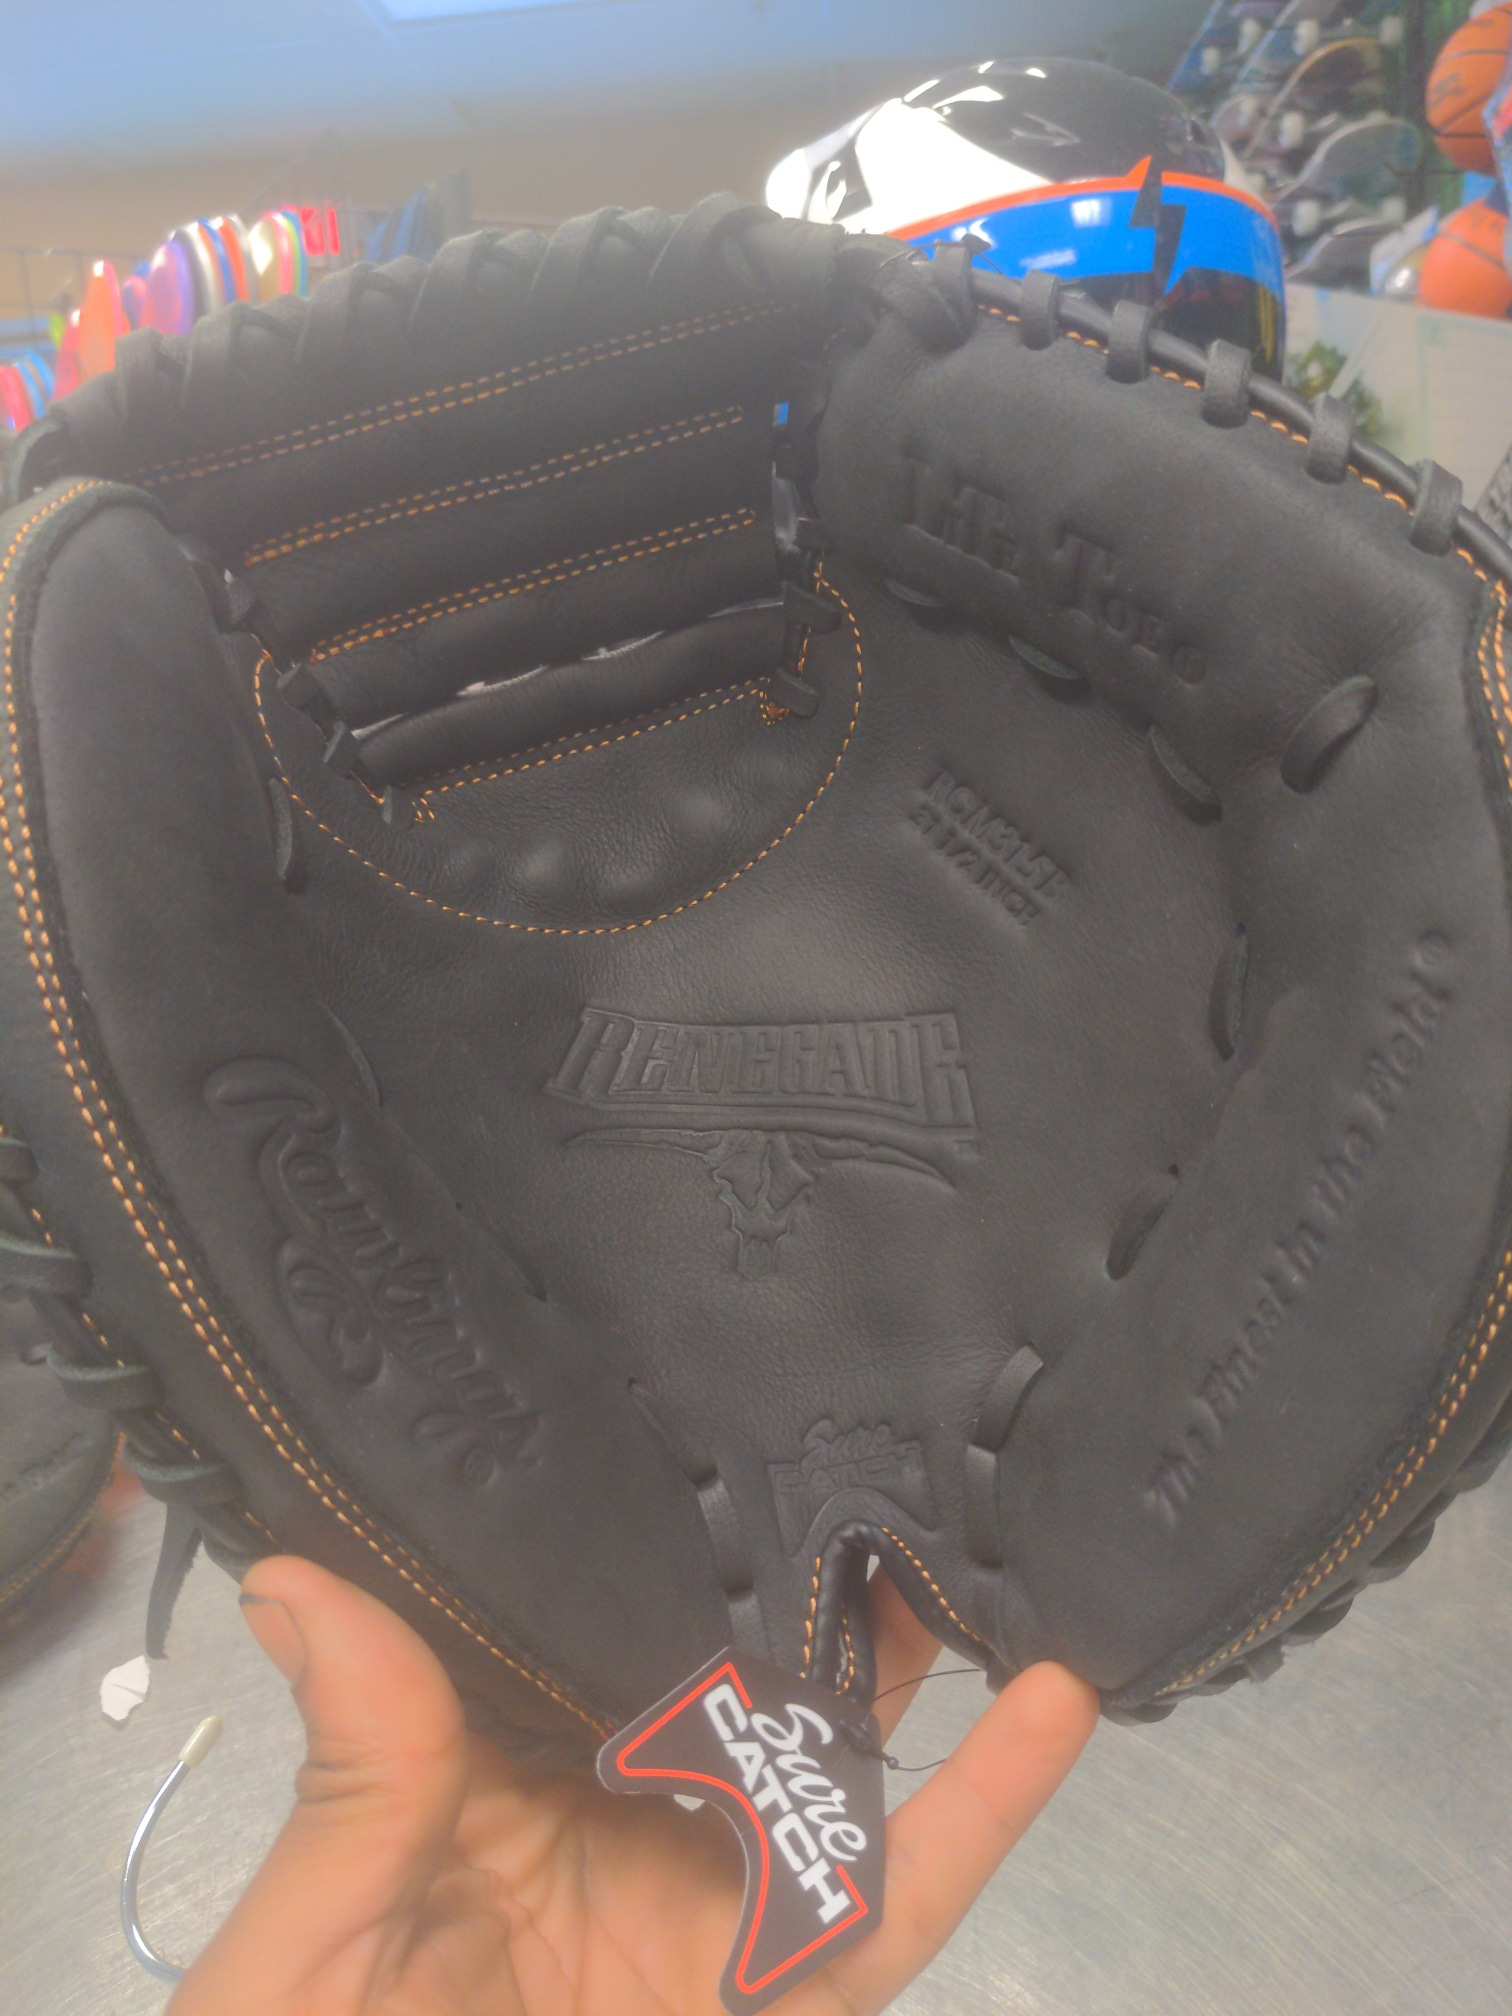 New Rawlings Right Hand Throw Baseball Glove 31.5"